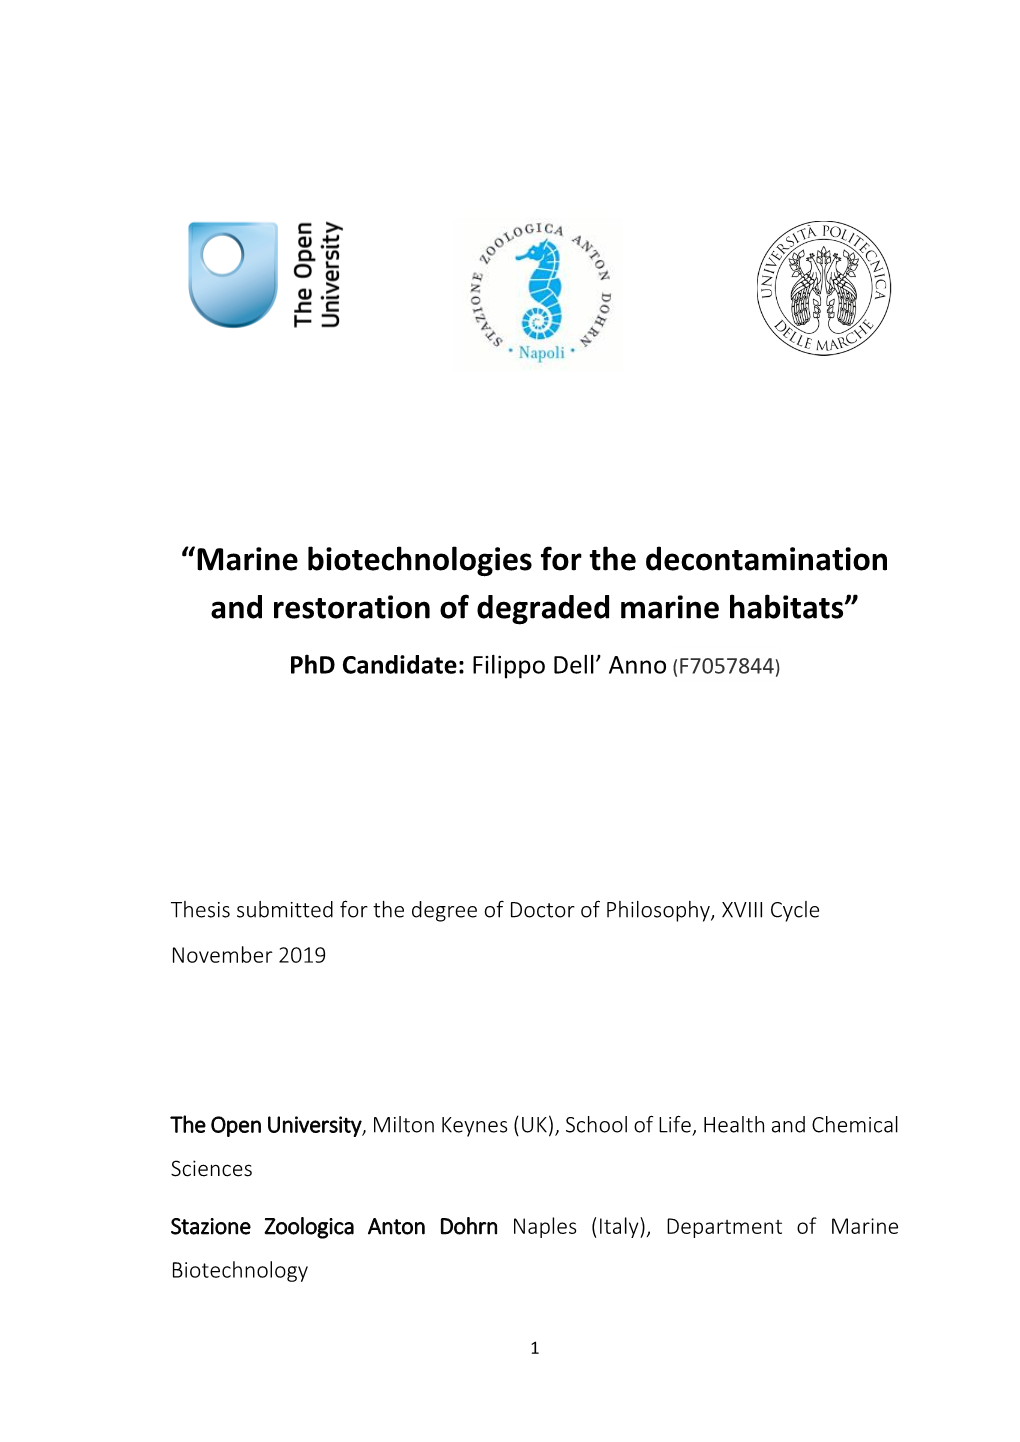 “Marine Biotechnologies for the Decontamination and Restoration of Degraded Marine Habitats”